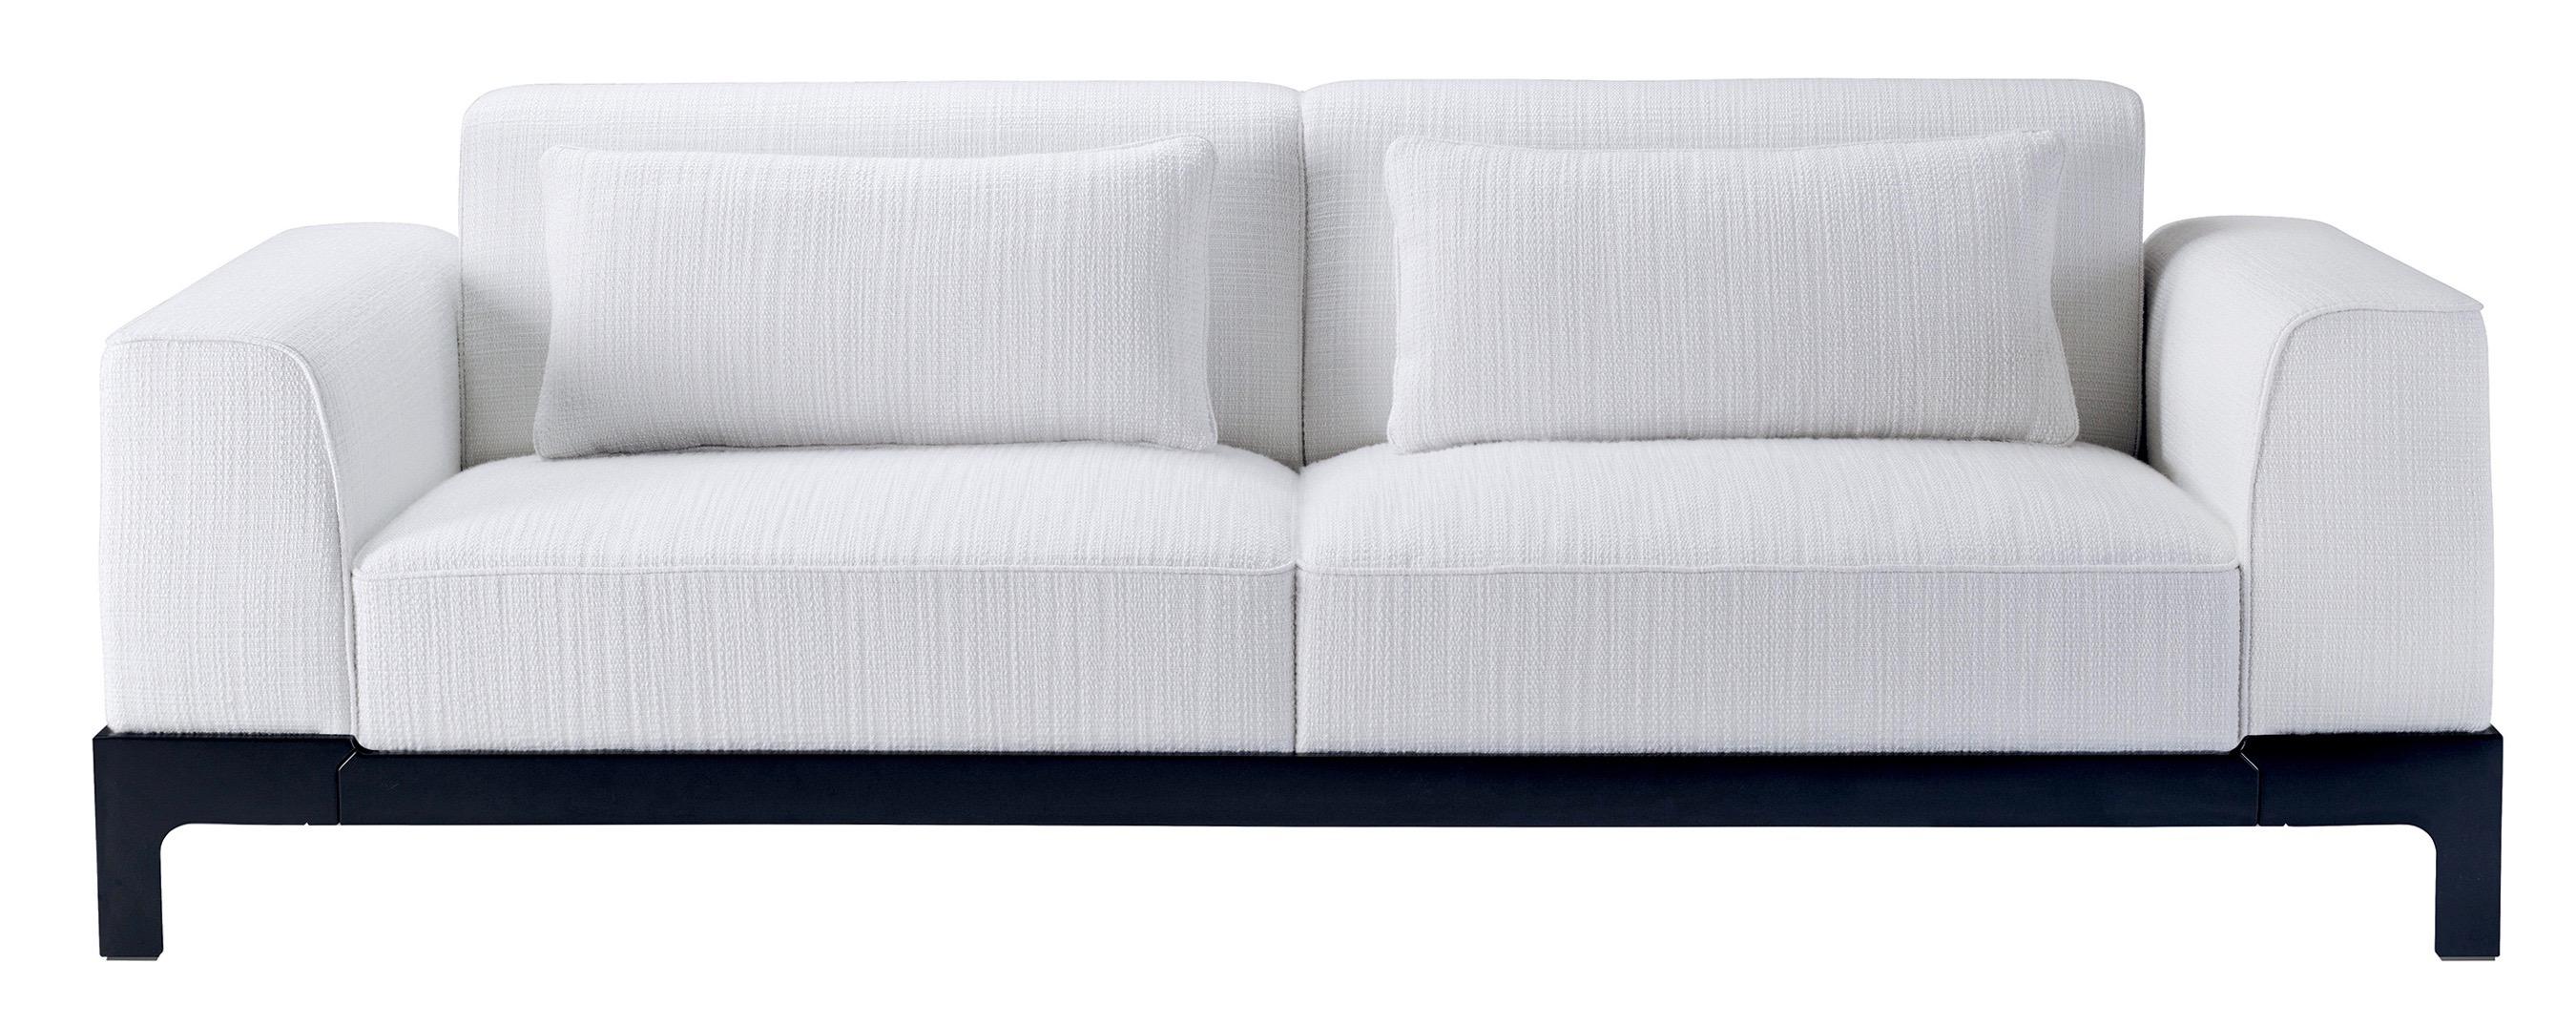 Promemoria Pullman Sofa in Fabric and Beech Base by Romeo Sozzi For Sale